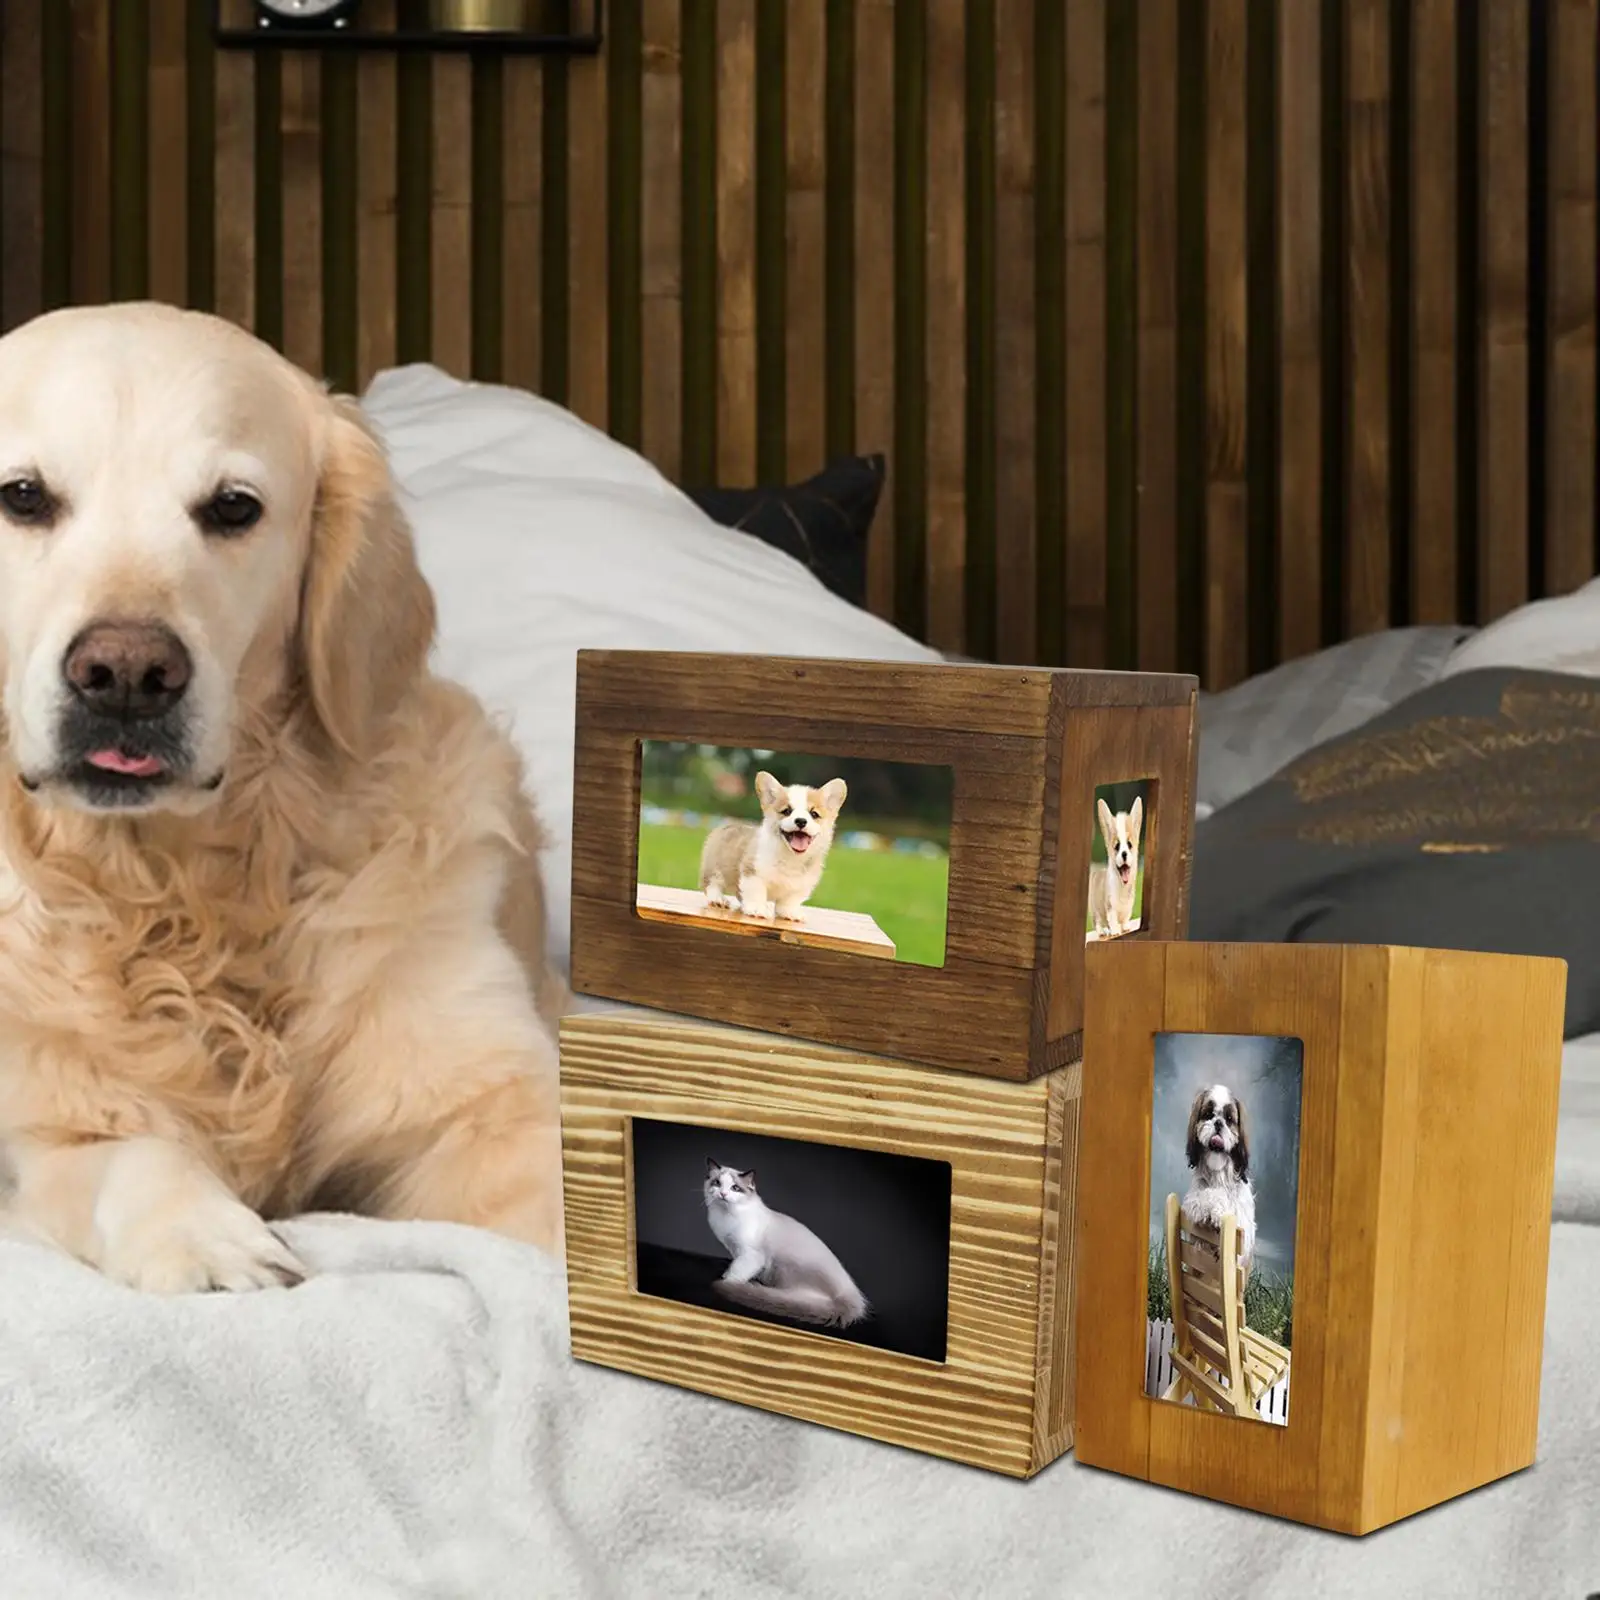 Wooden Funeral Burial Urns Box for Pet, Memorial Cremation Urn Keepsake